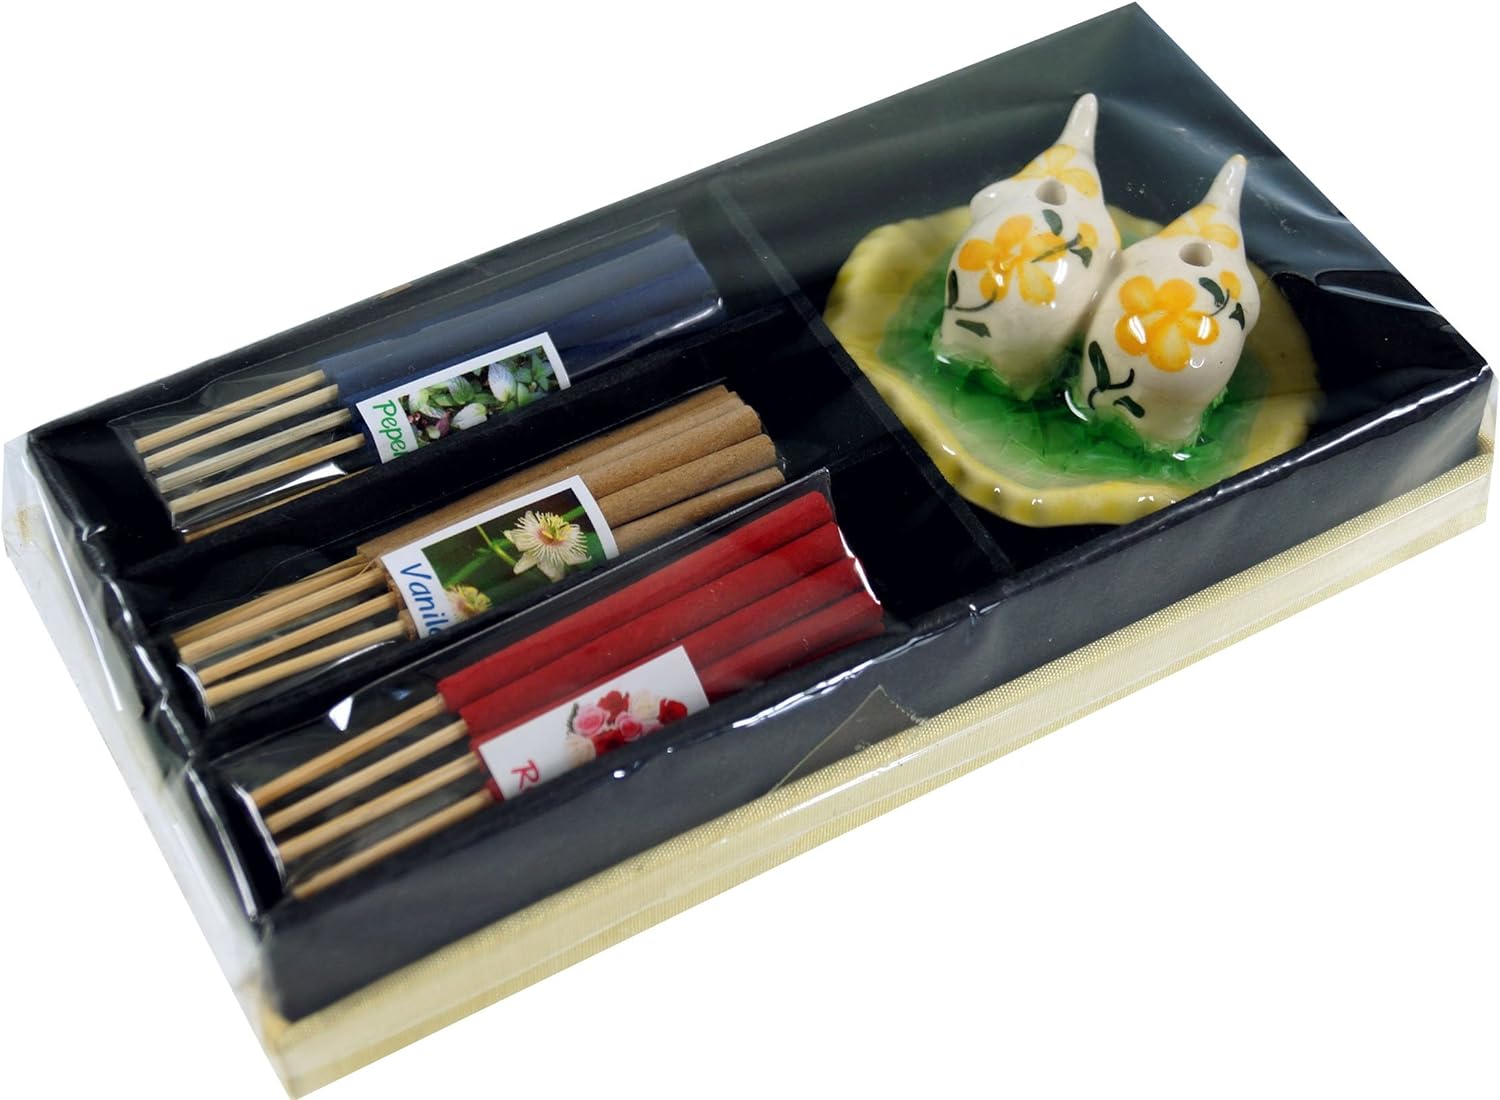 GURU SHOP Incense Gift Set from Thailand - Mix 2, Black, Incense Sticks & Sets from Thailand